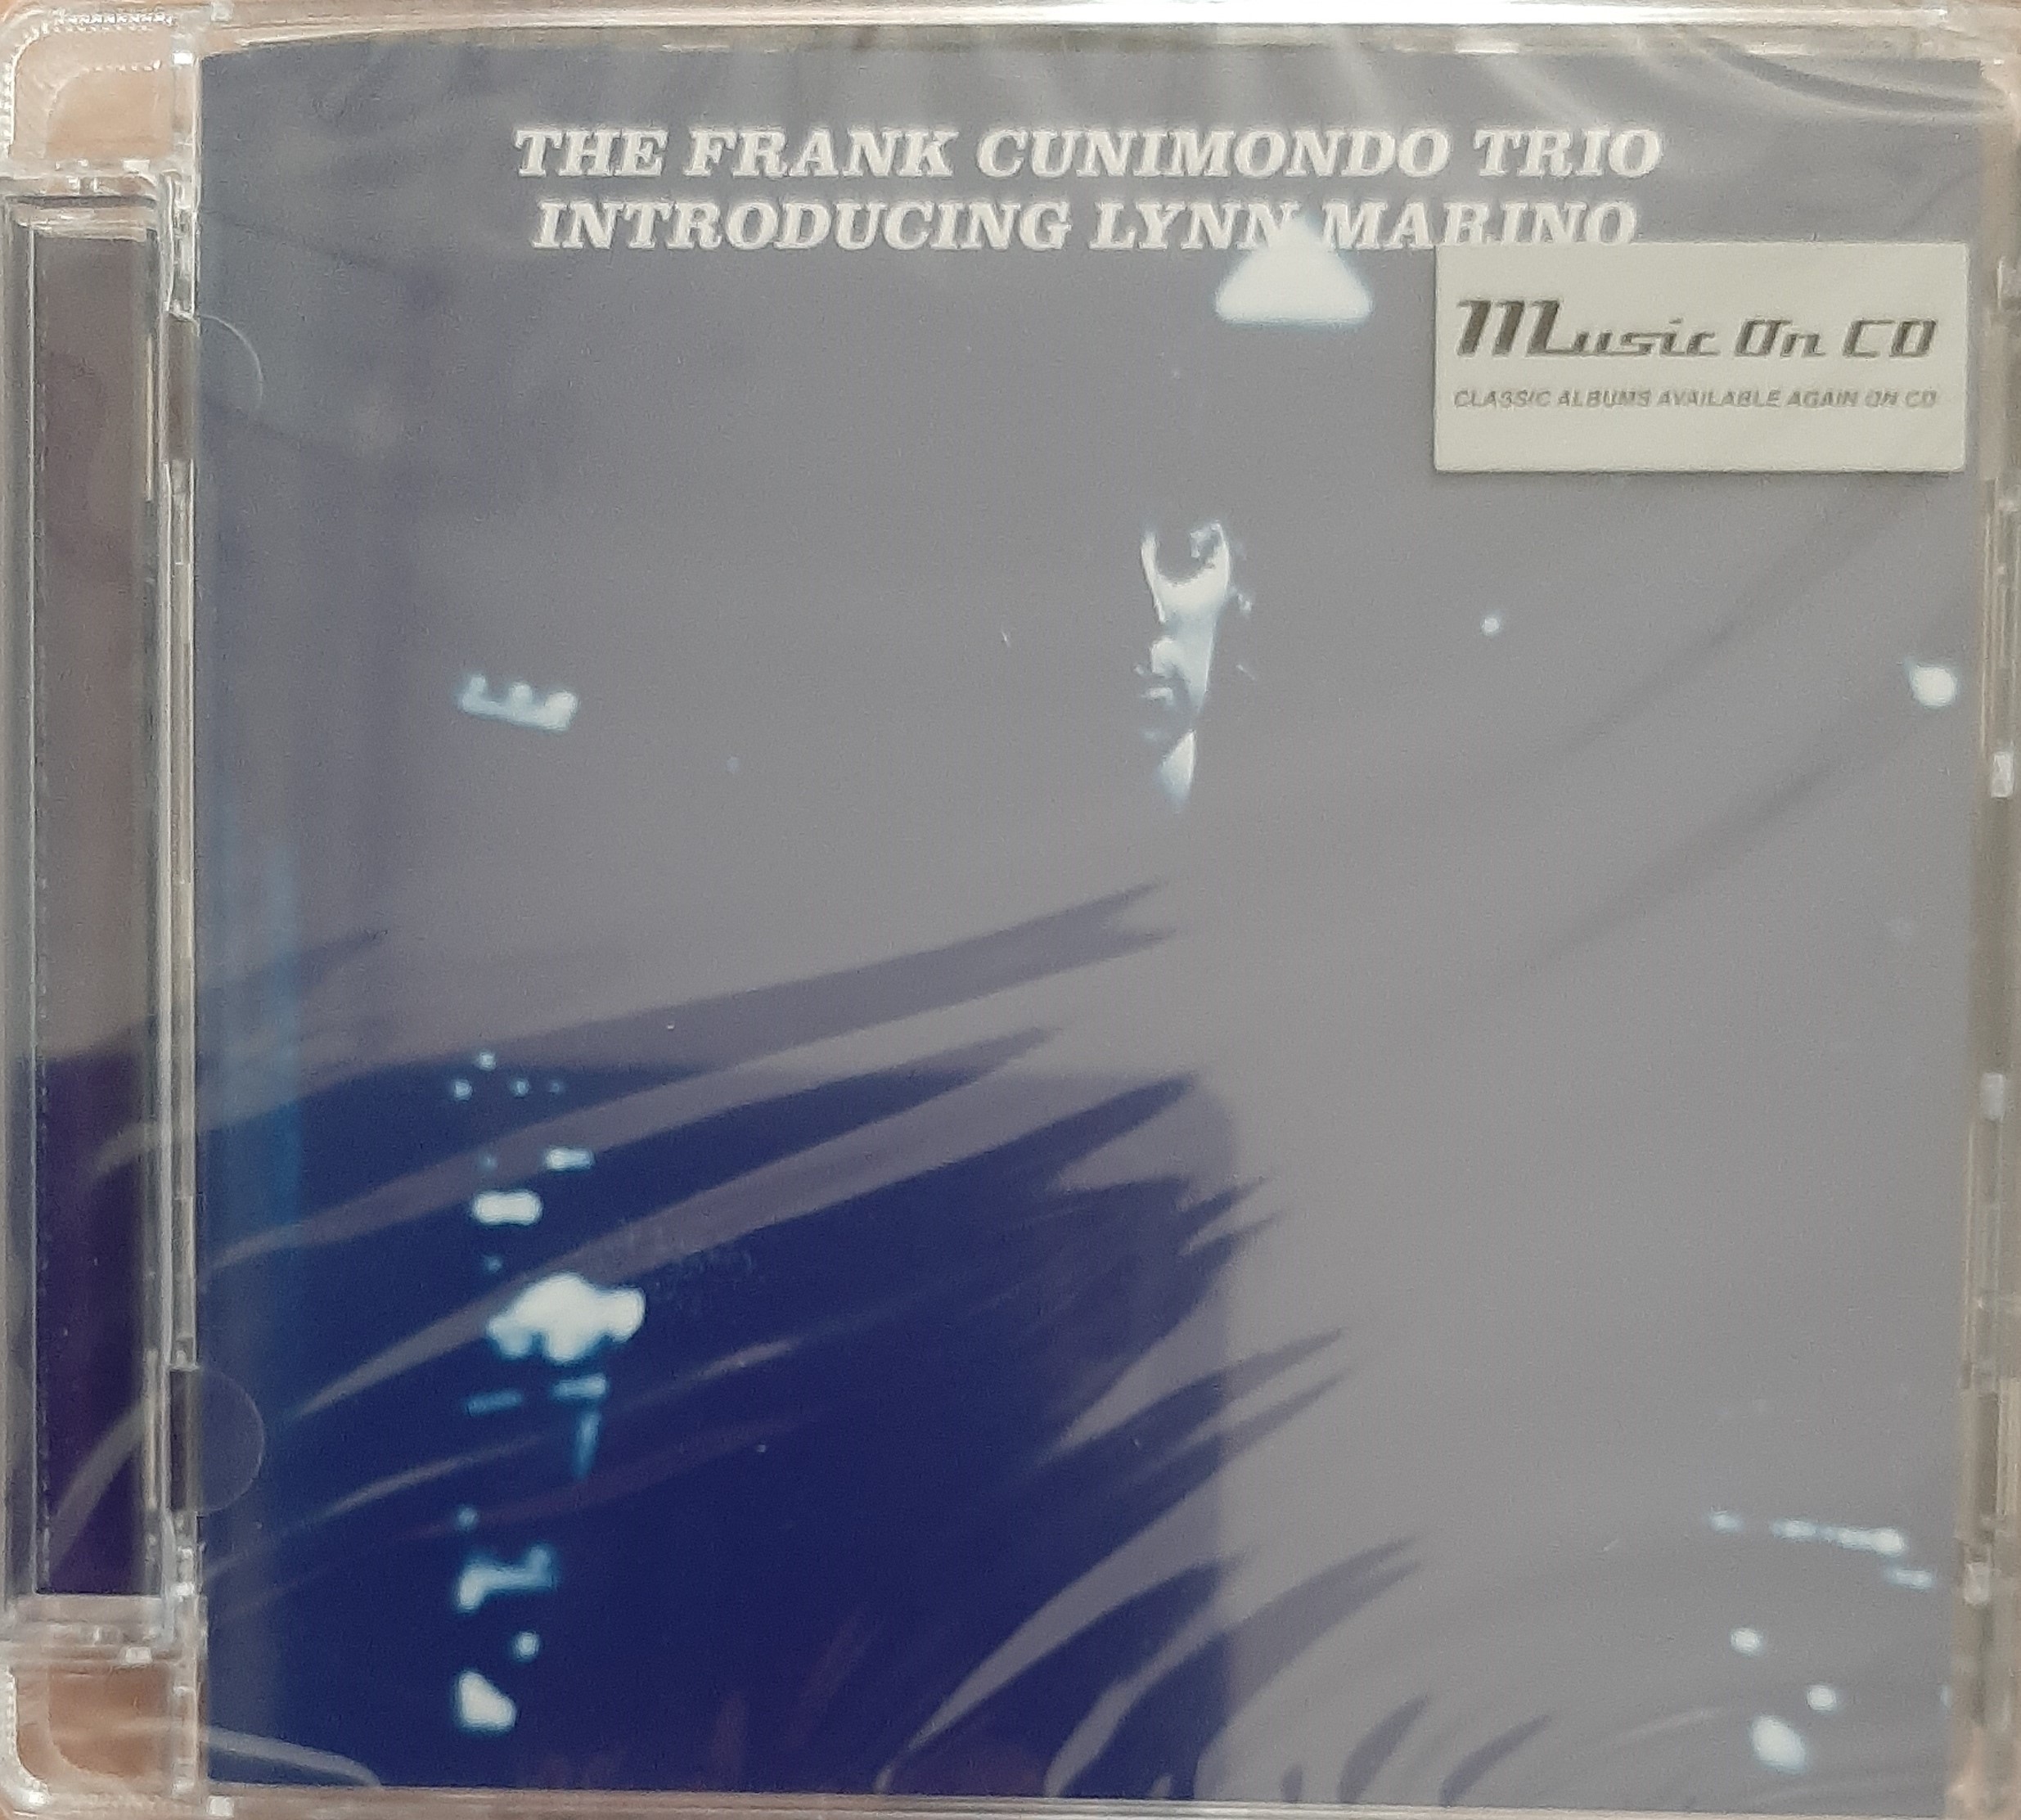 The Frank Cunimondo Trio Introducing Lynn Marino ‎– The Frank